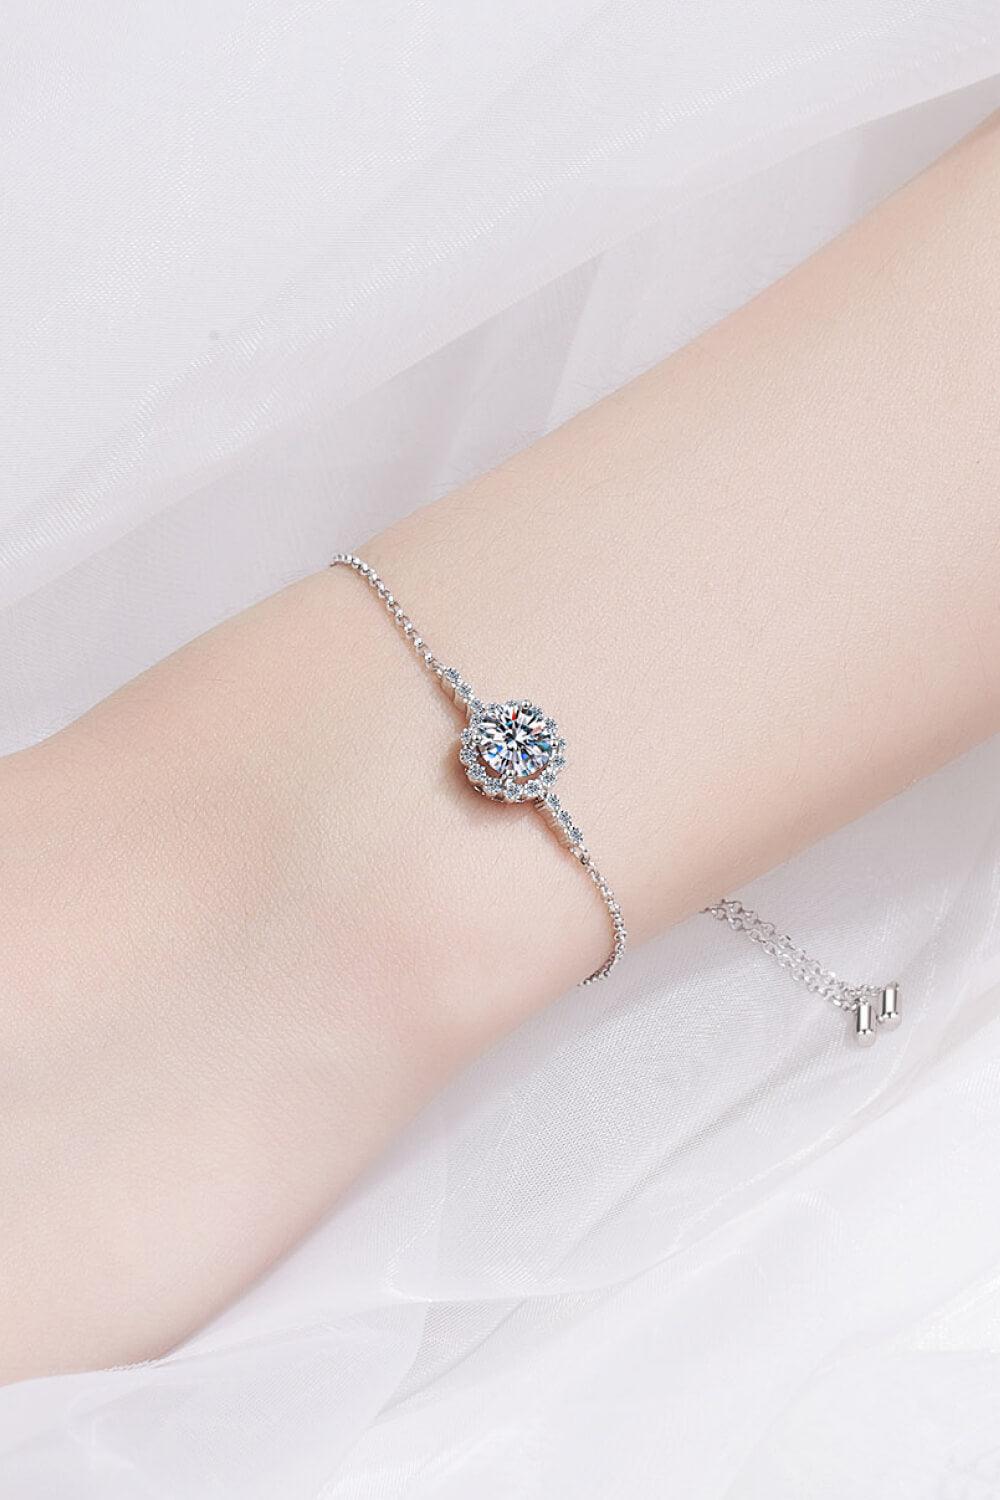 Moissanite Diamond Bracelet S925 -  sterling silver adjustable bracelet with one carrot diamond   #Firefly Lane Boutique1